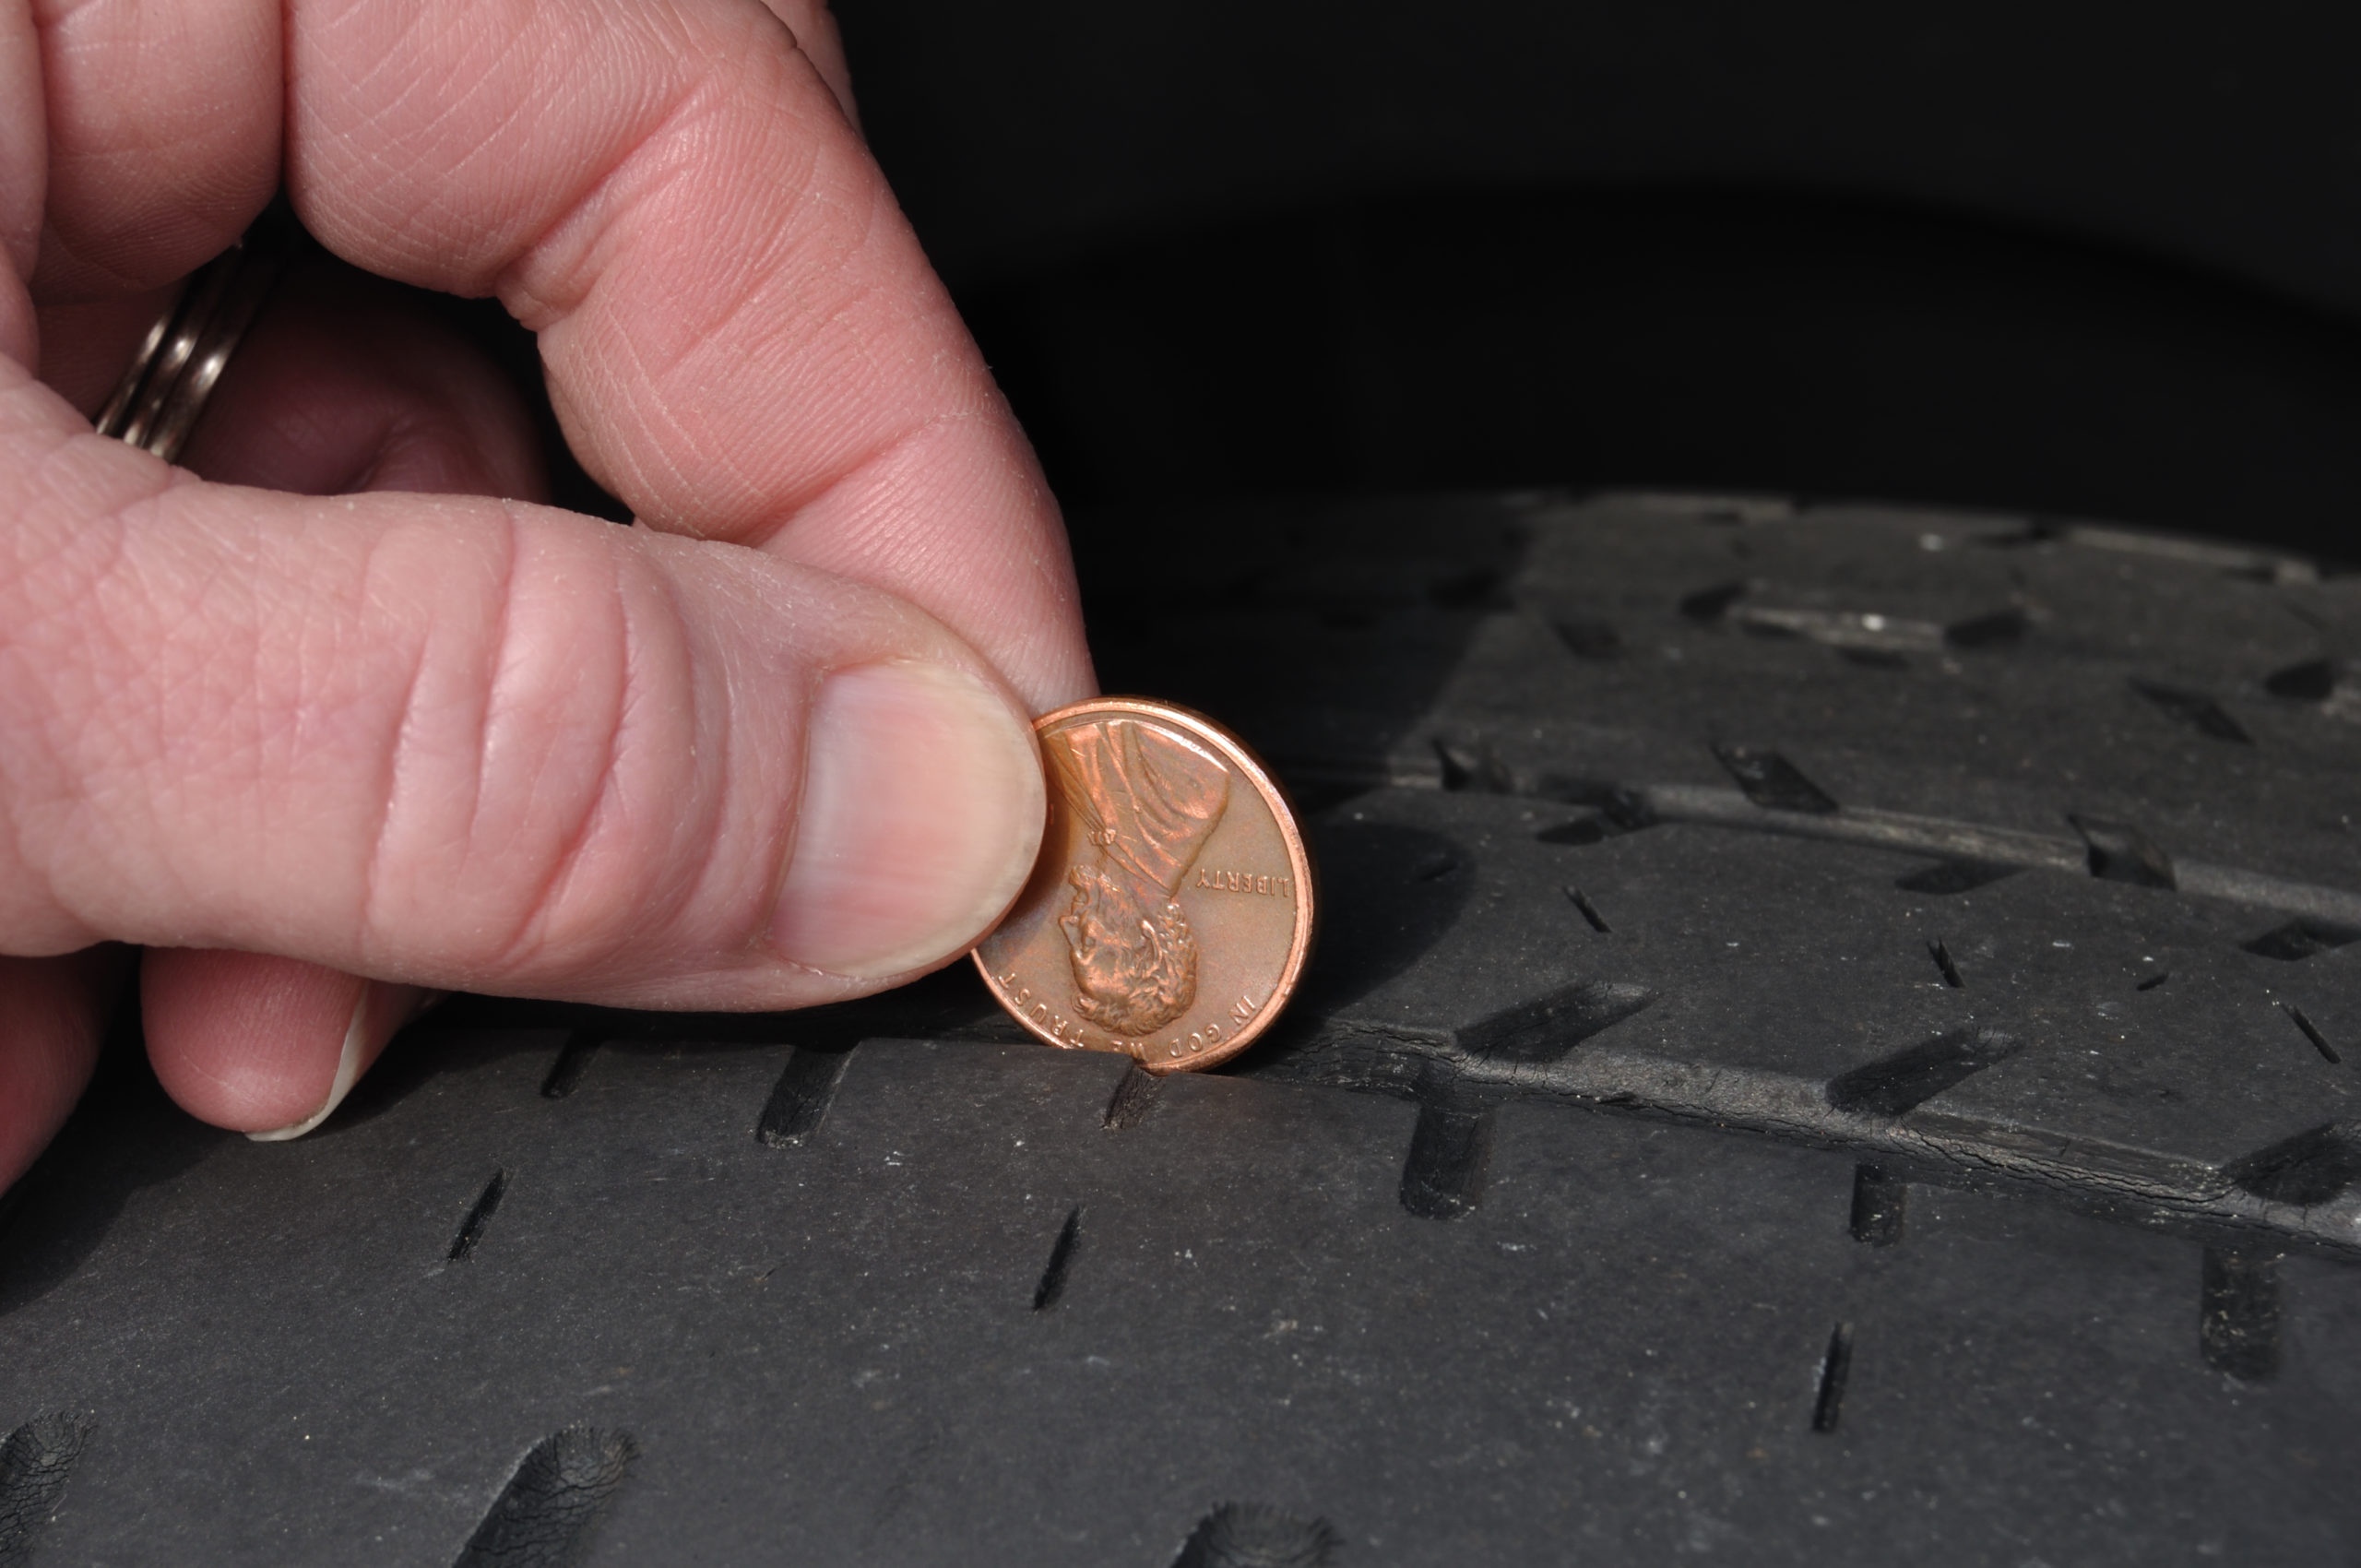 Penny test, tire maintenance